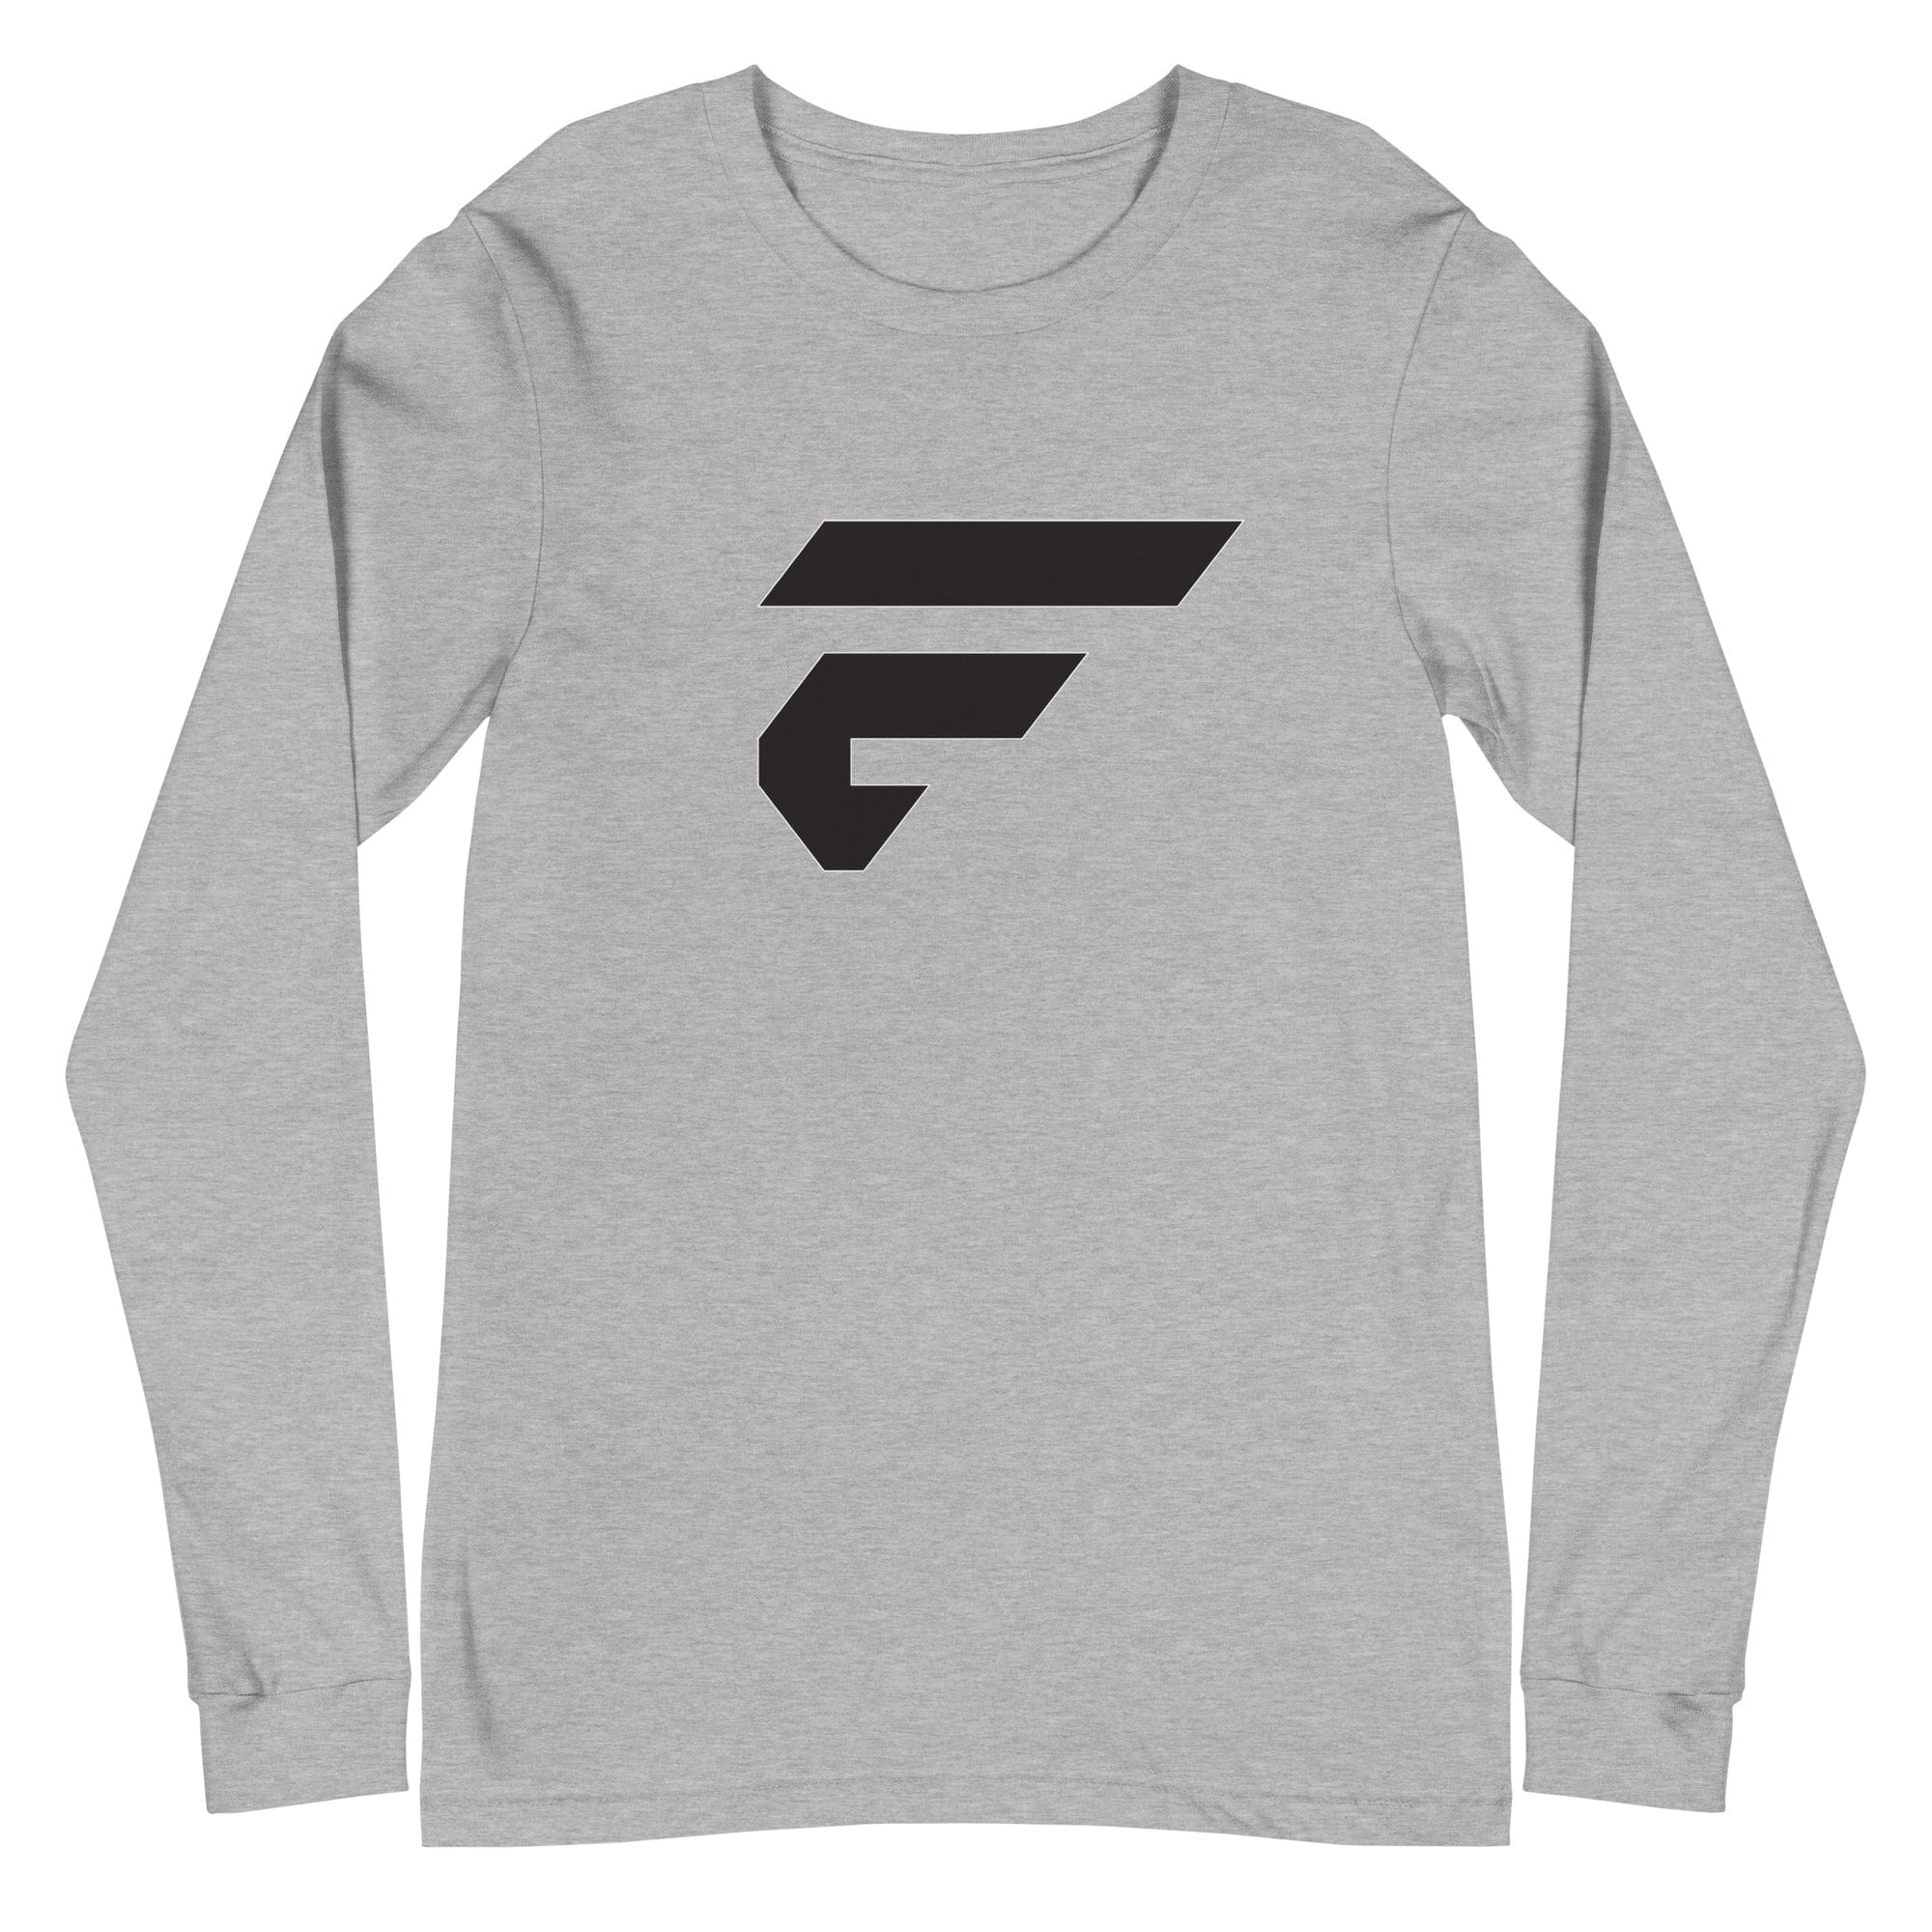 Heathered grey unisex cotton longsleeve shirt with Fire Cornhole F logo in black